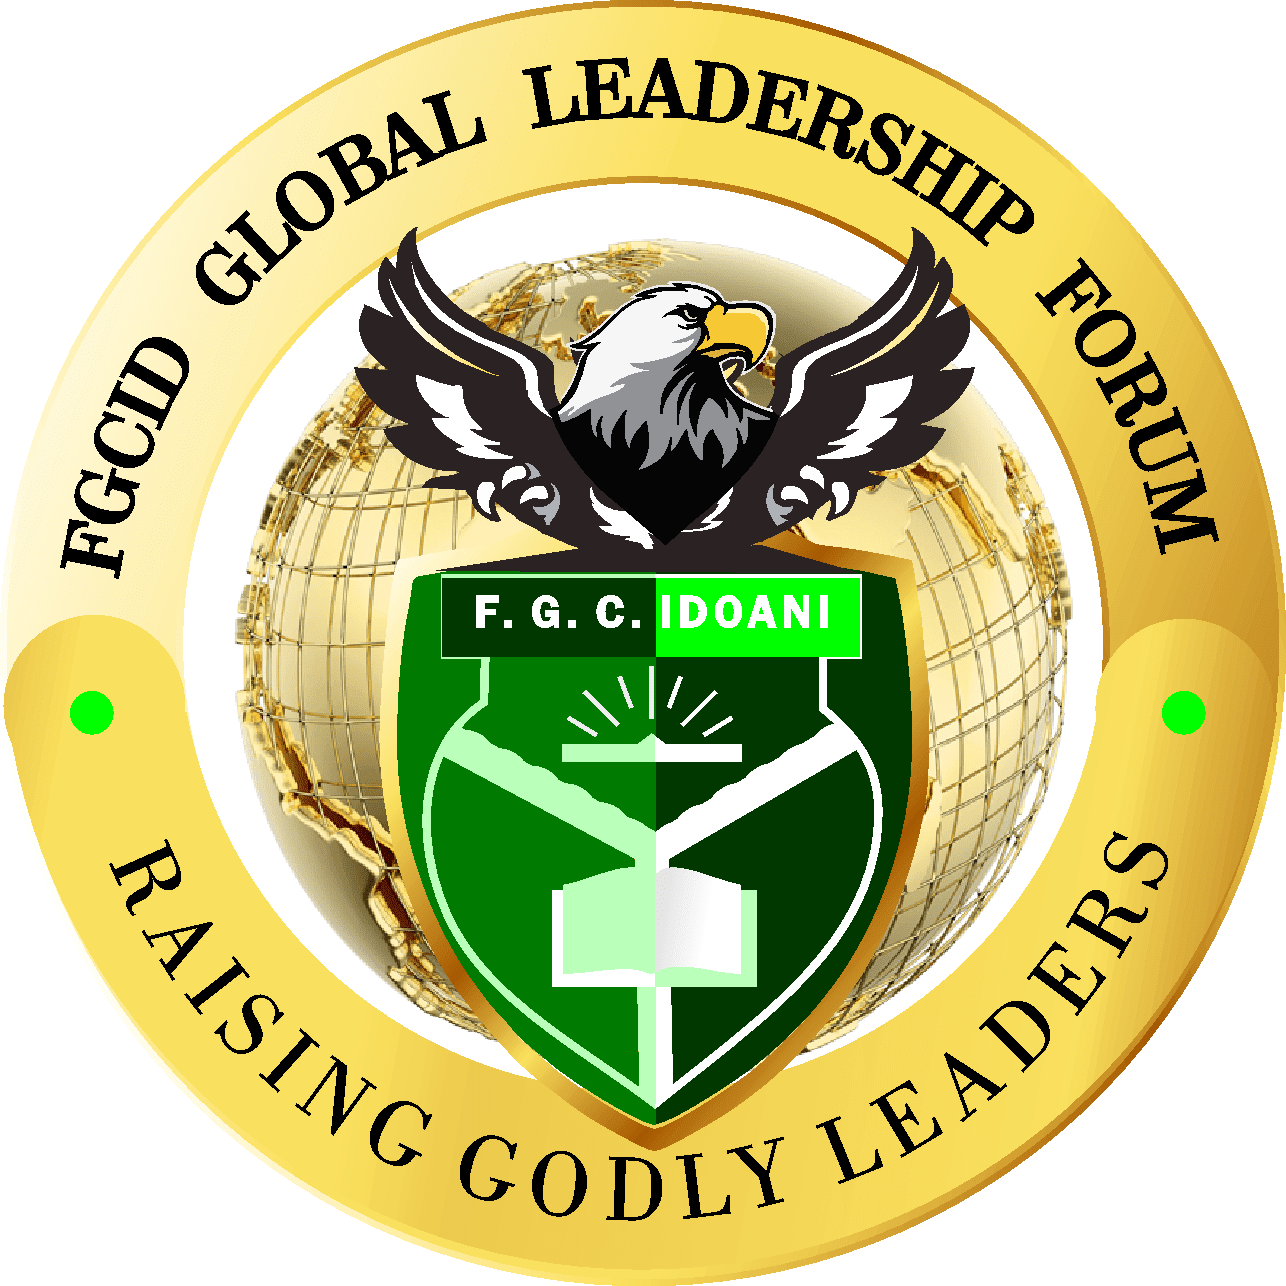 FGCID Global Leadership Forum